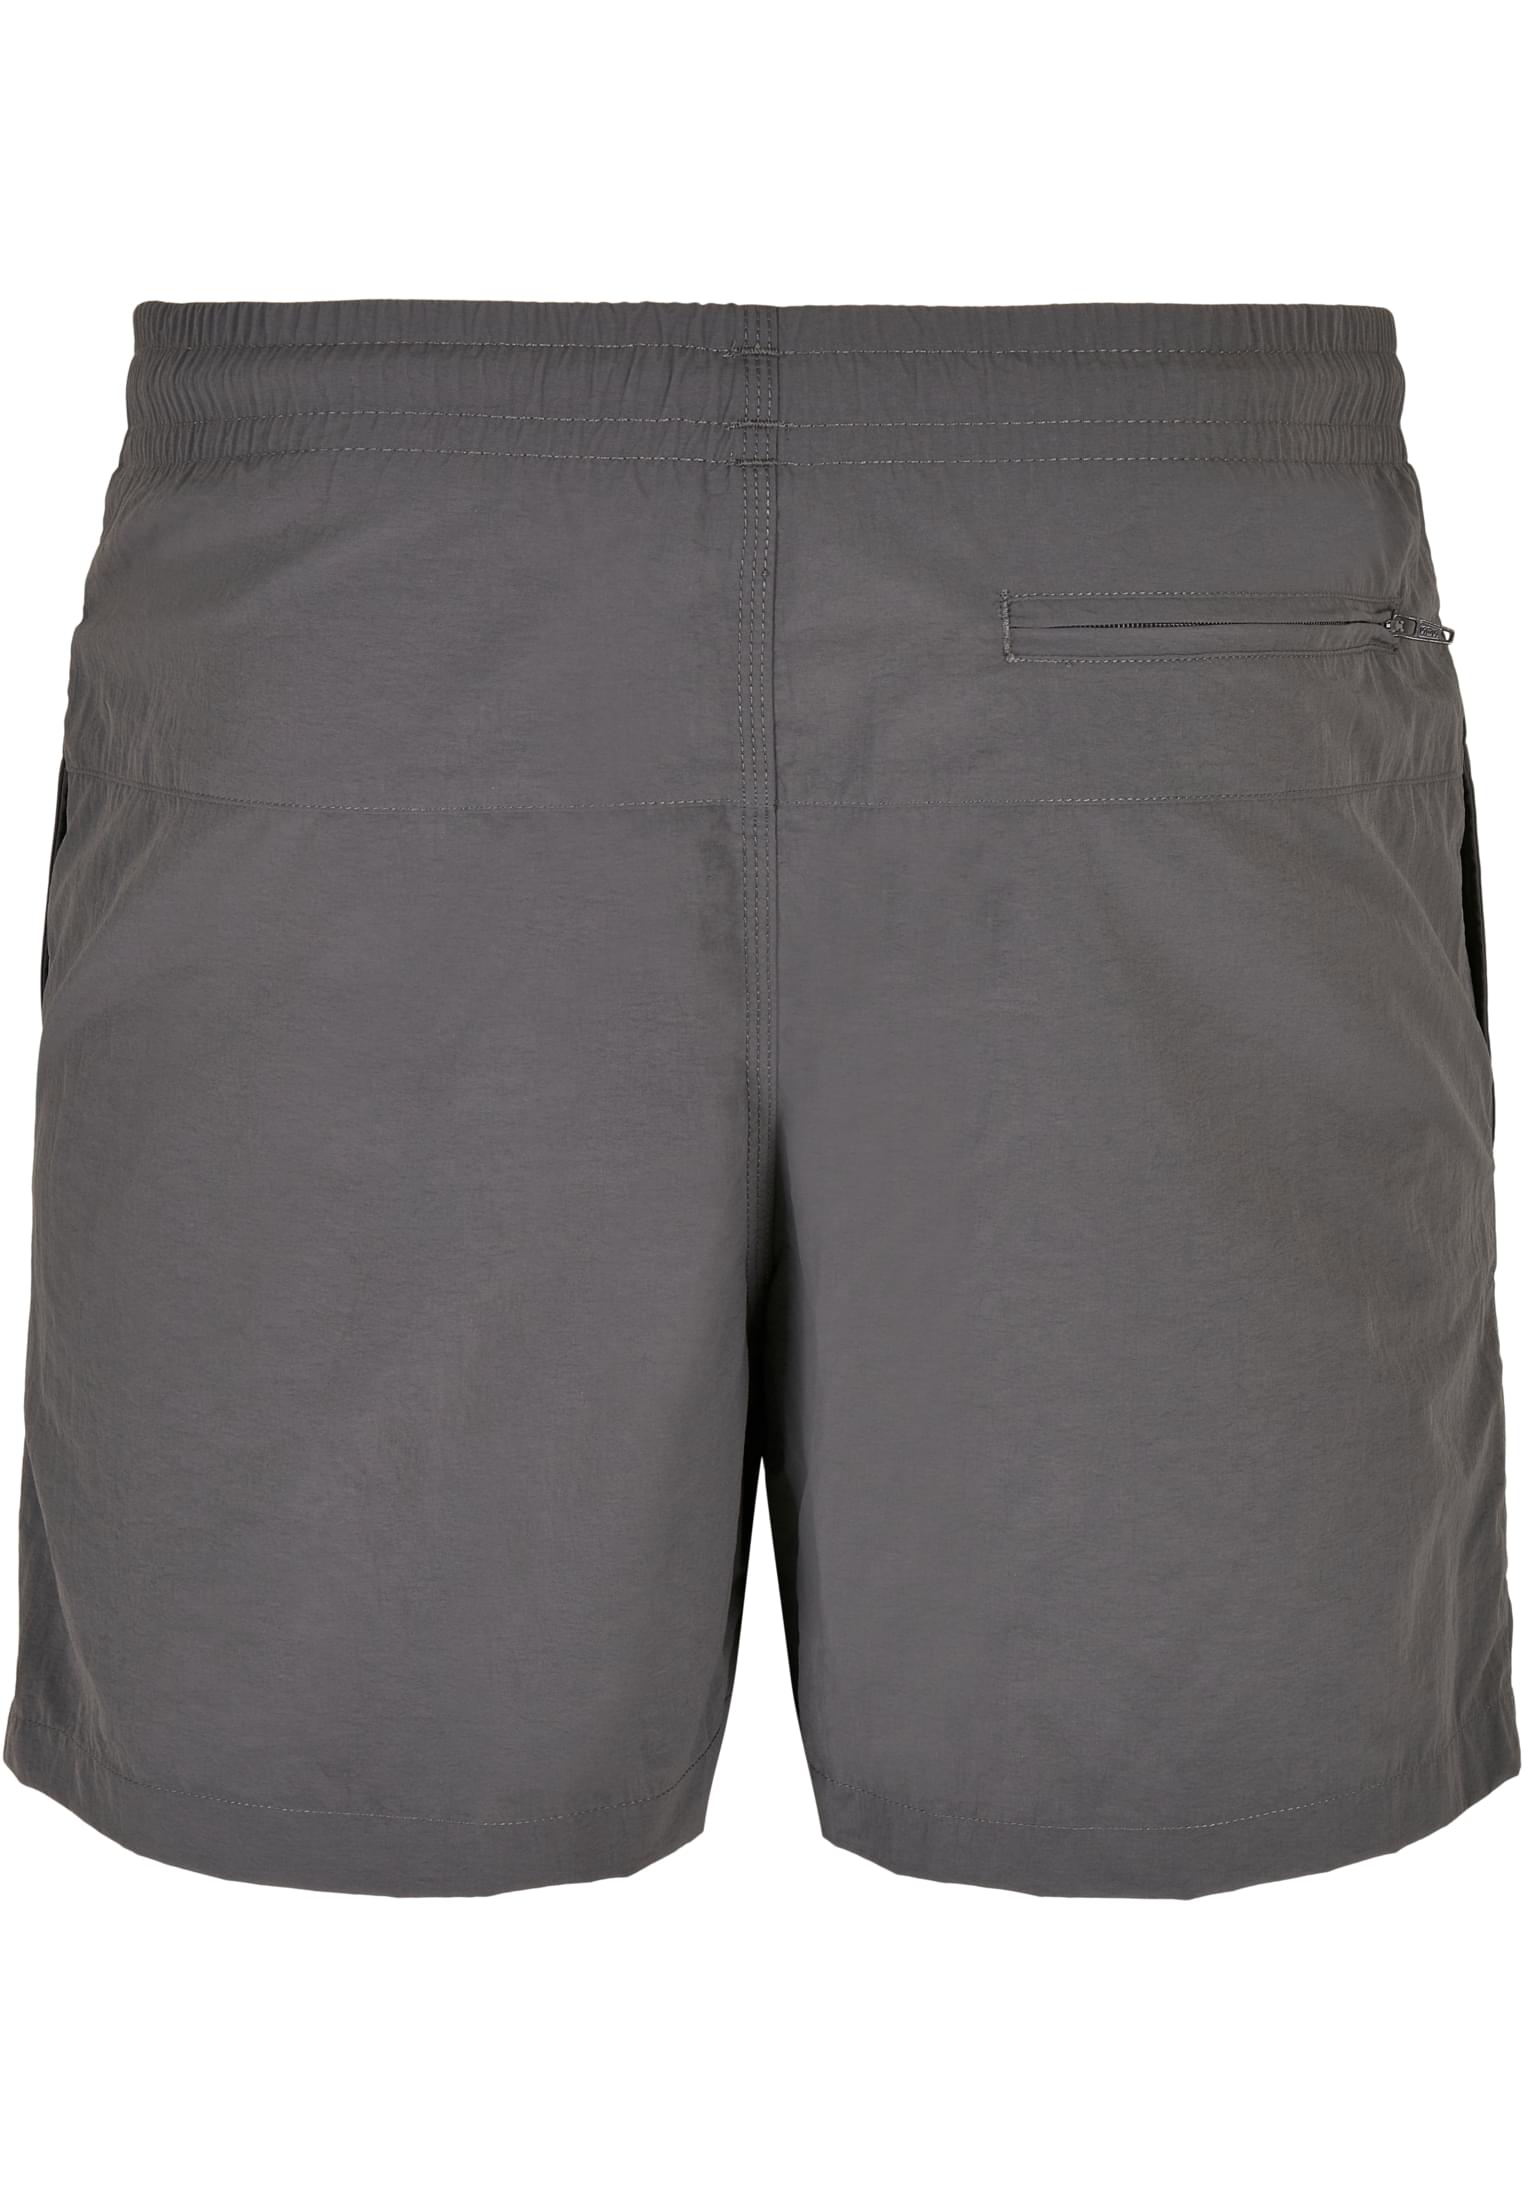 Plus Size Block Swim Shorts in Farbe darkshadow